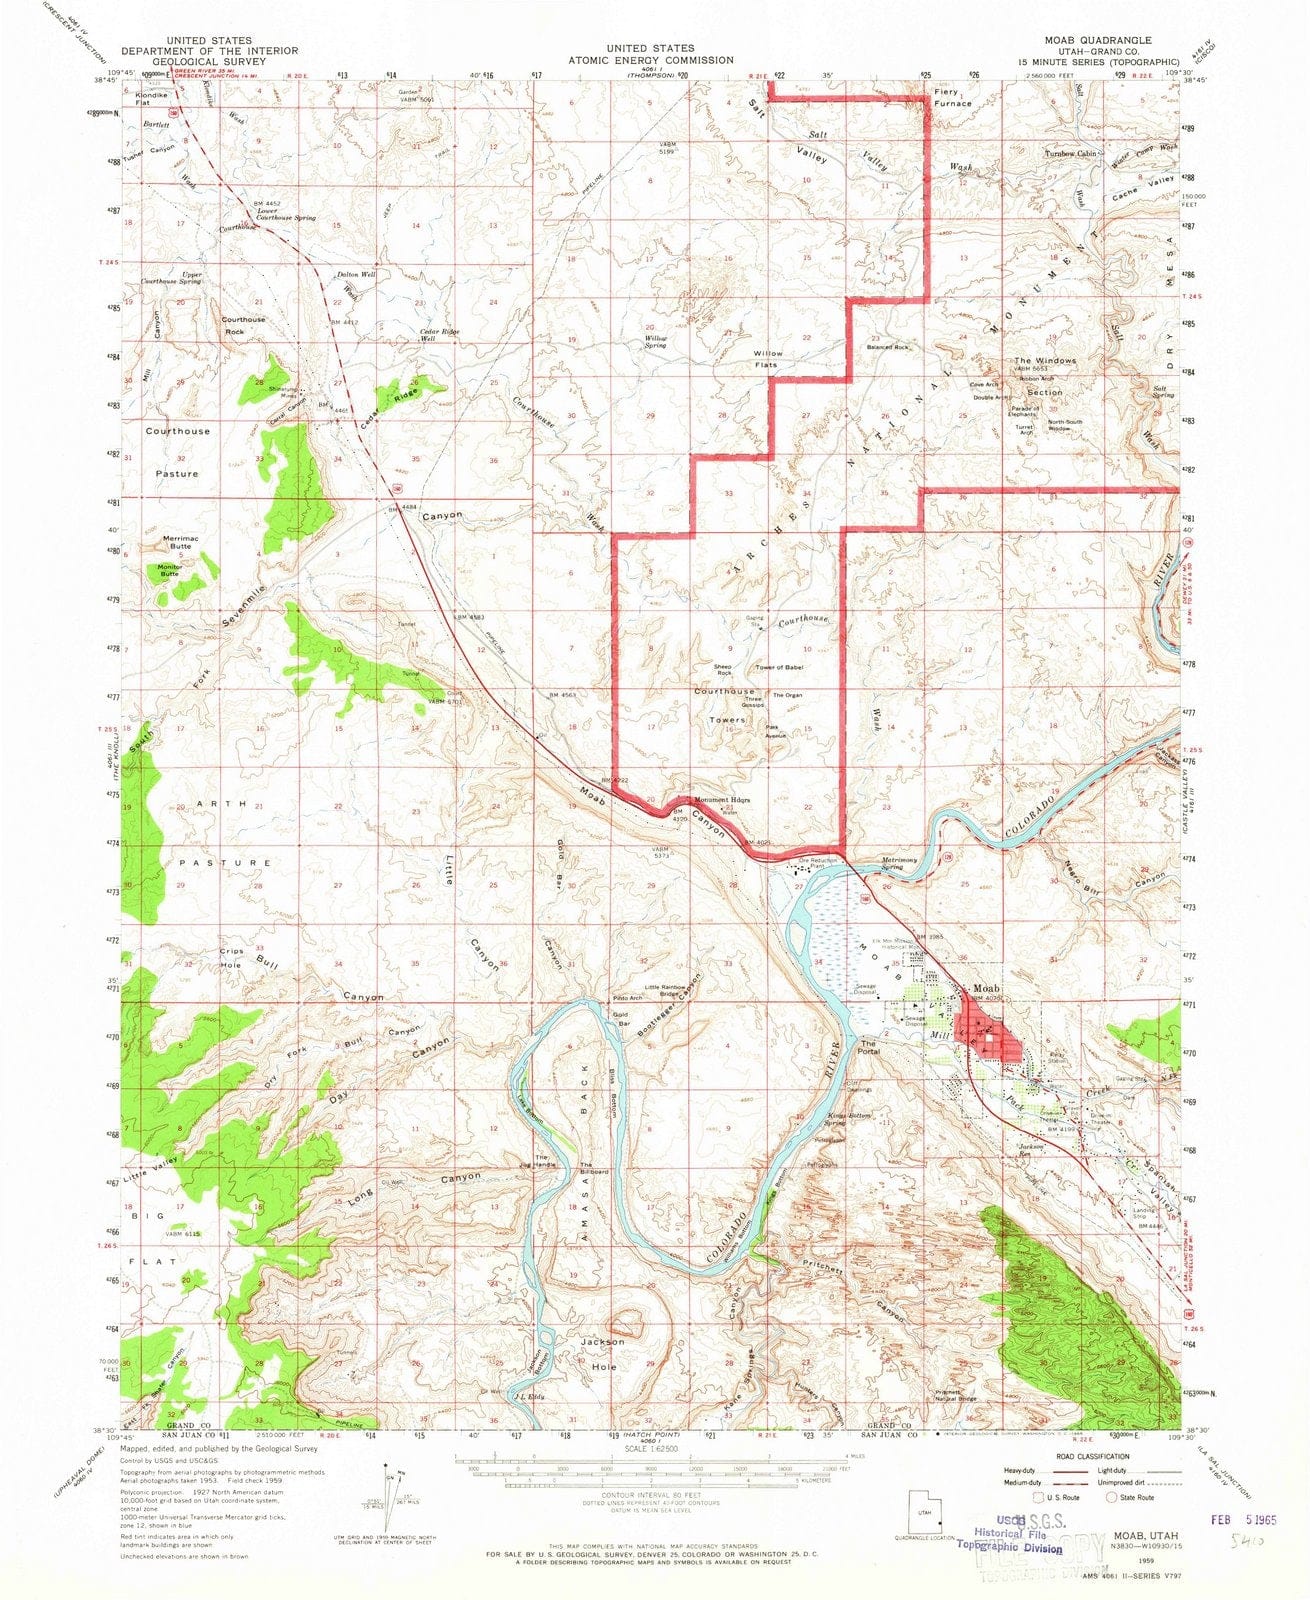 1959 Moab, UT - Utah - USGS Topographic Map